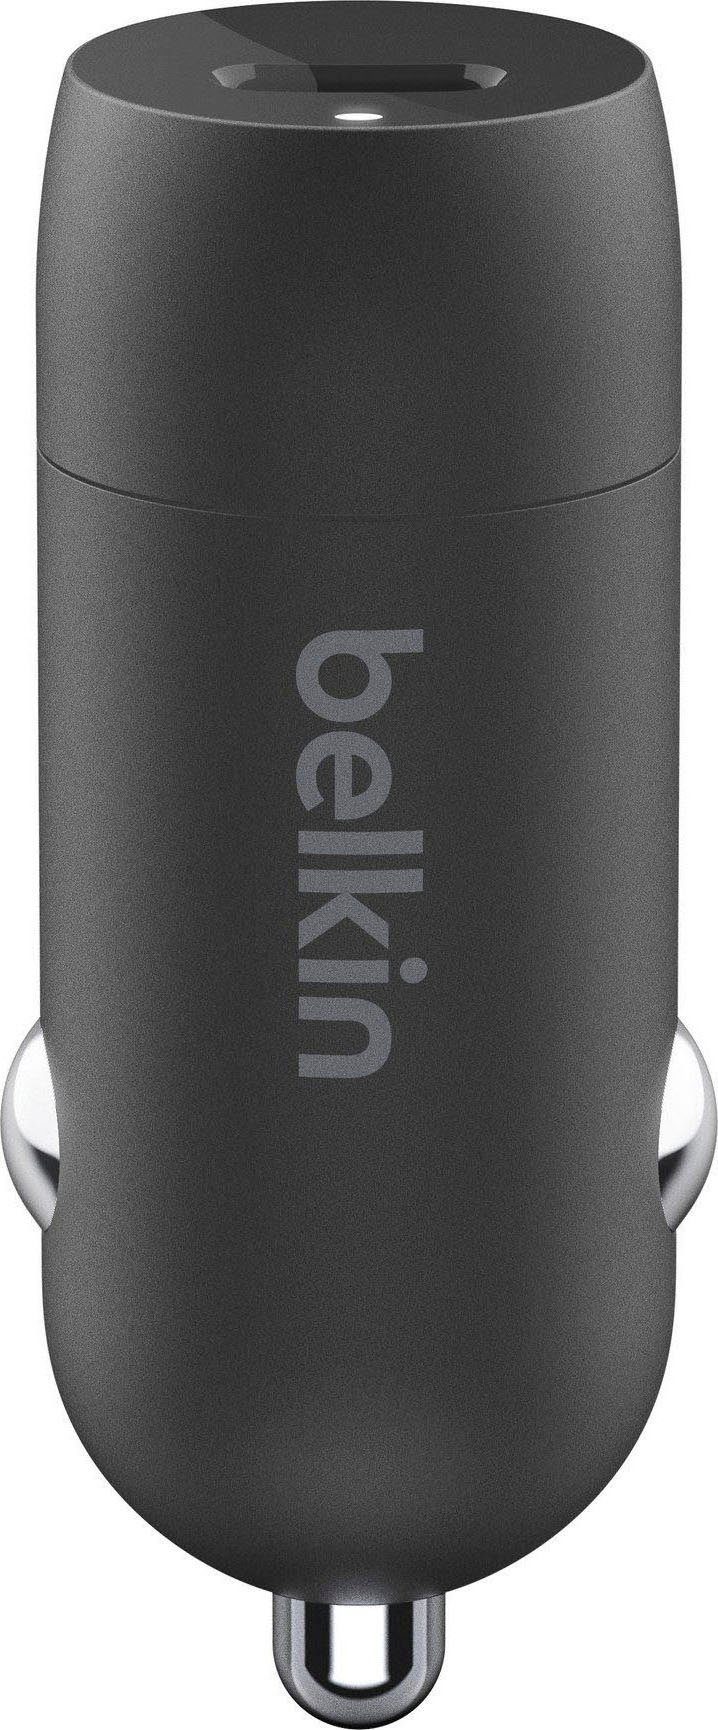 USB-C Autobatterie-Ladegerät mit Delivery Kfz-Ladegerät 20W Power Belkin